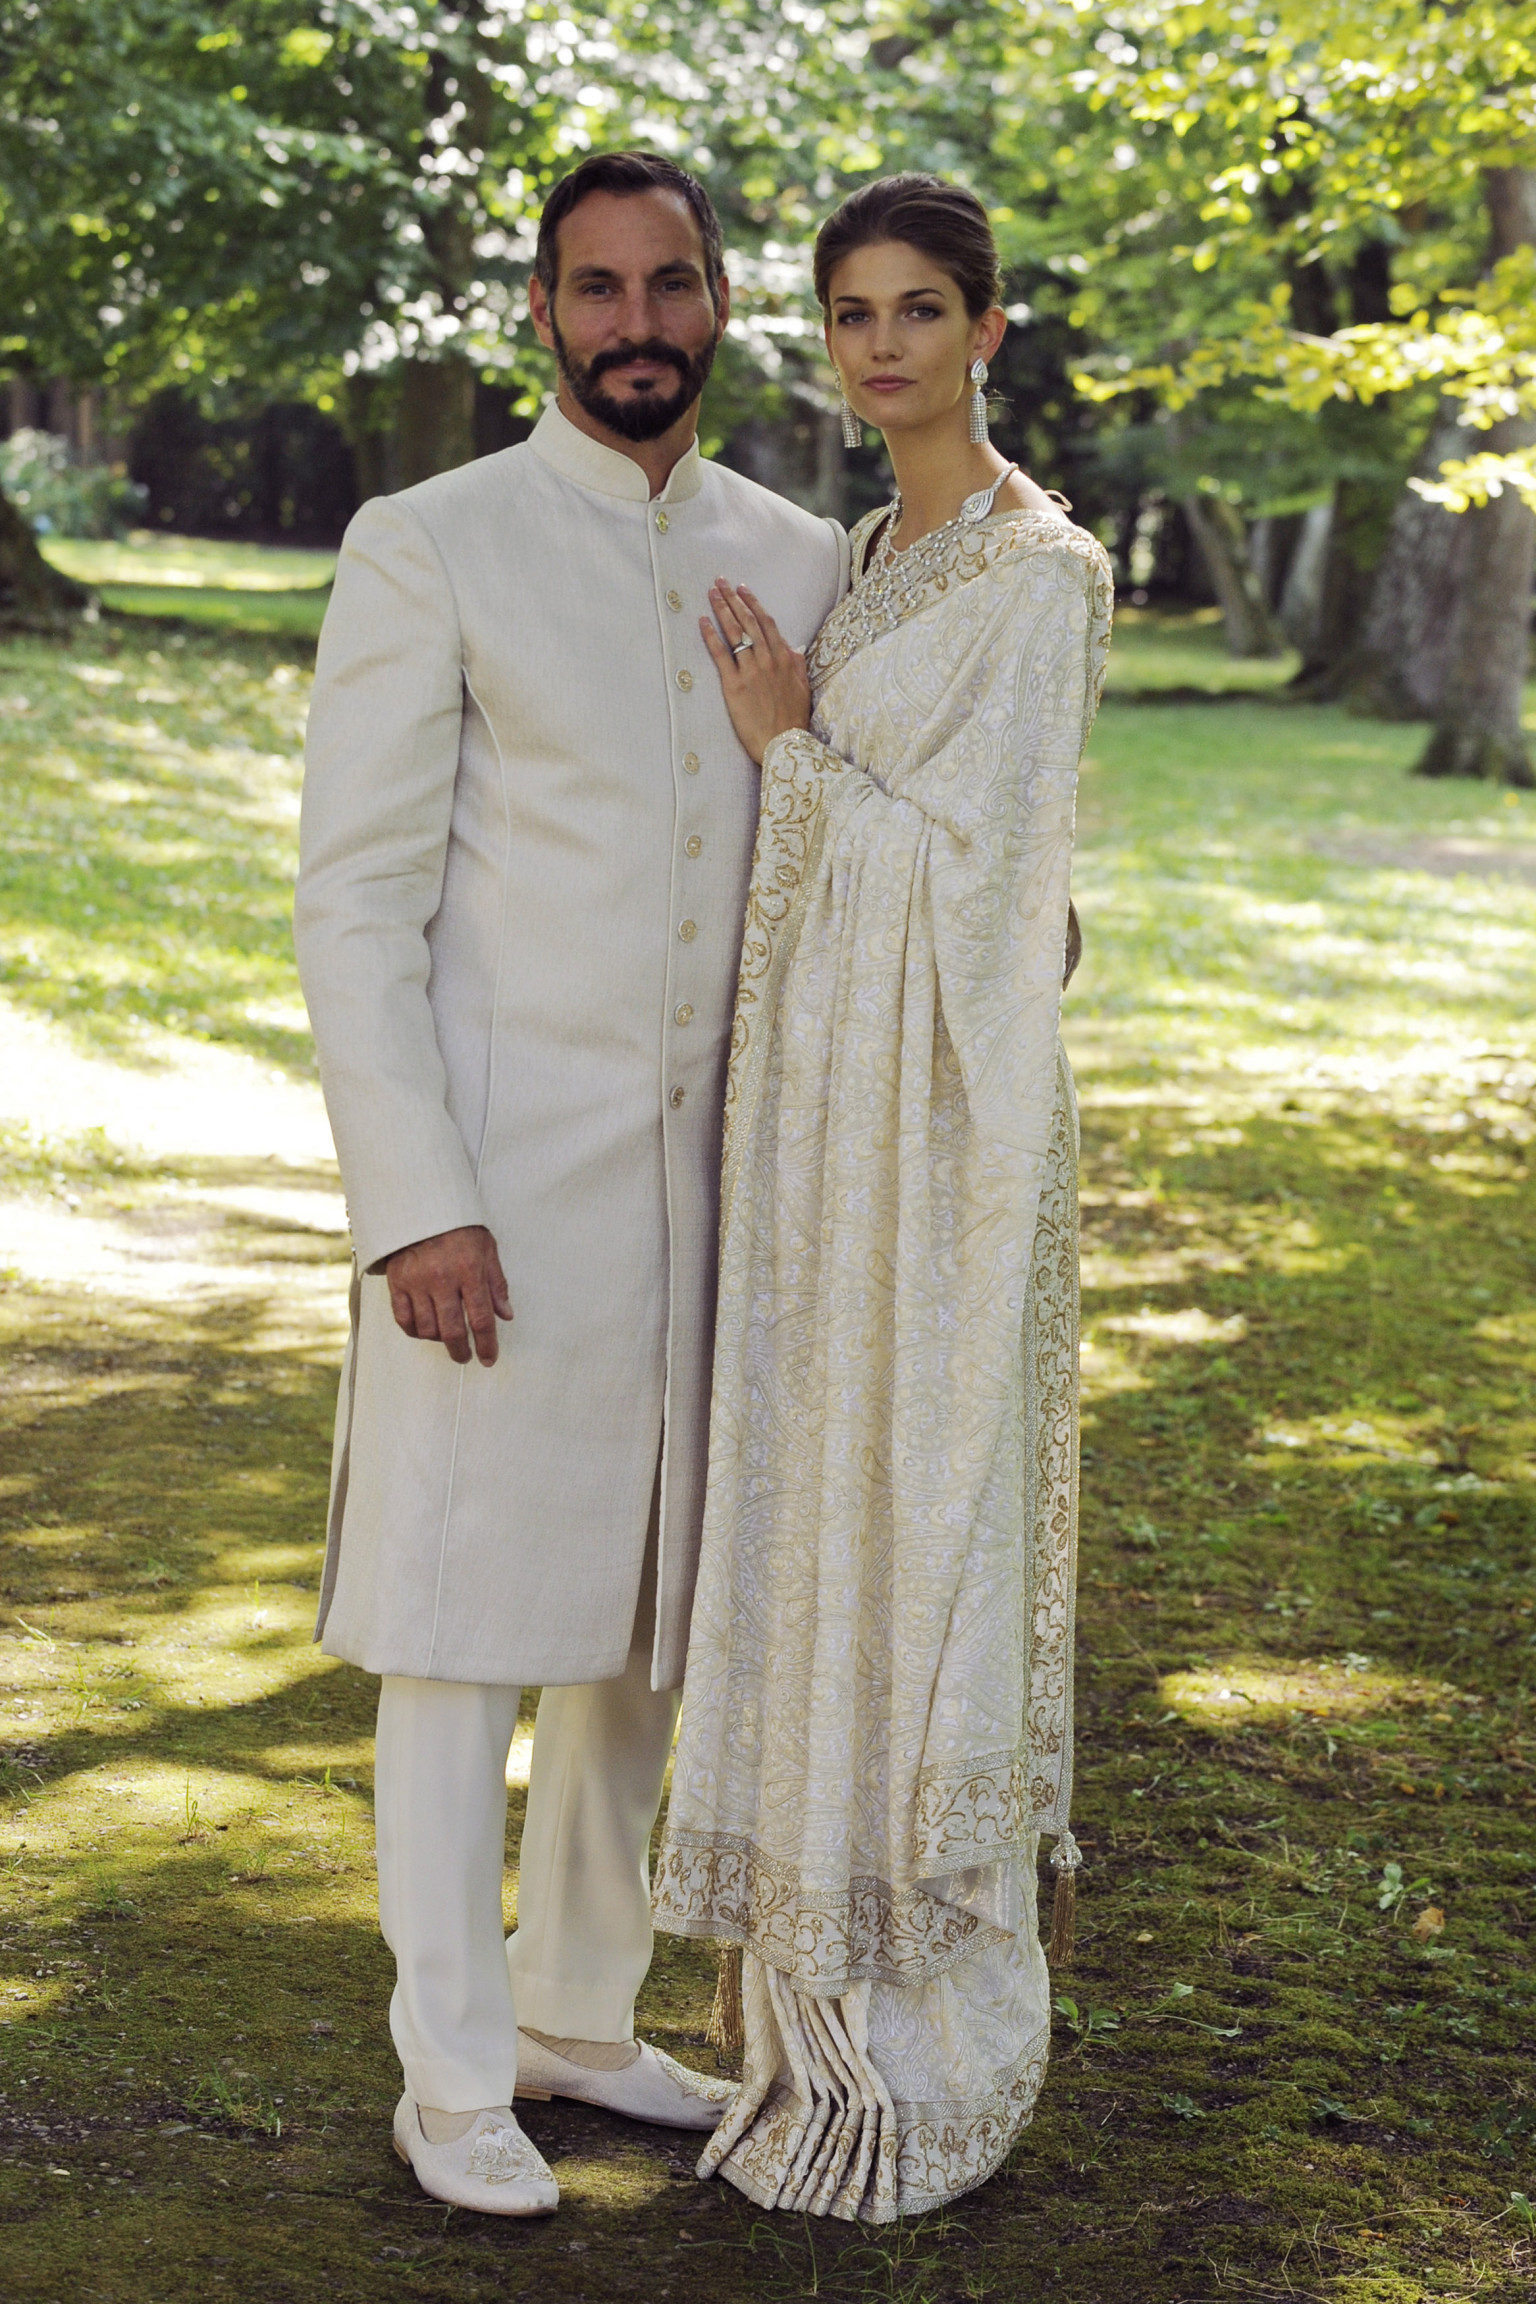 Kendra Spears Wedding To Prince Rahim Aga Khan Makes Model A Princess